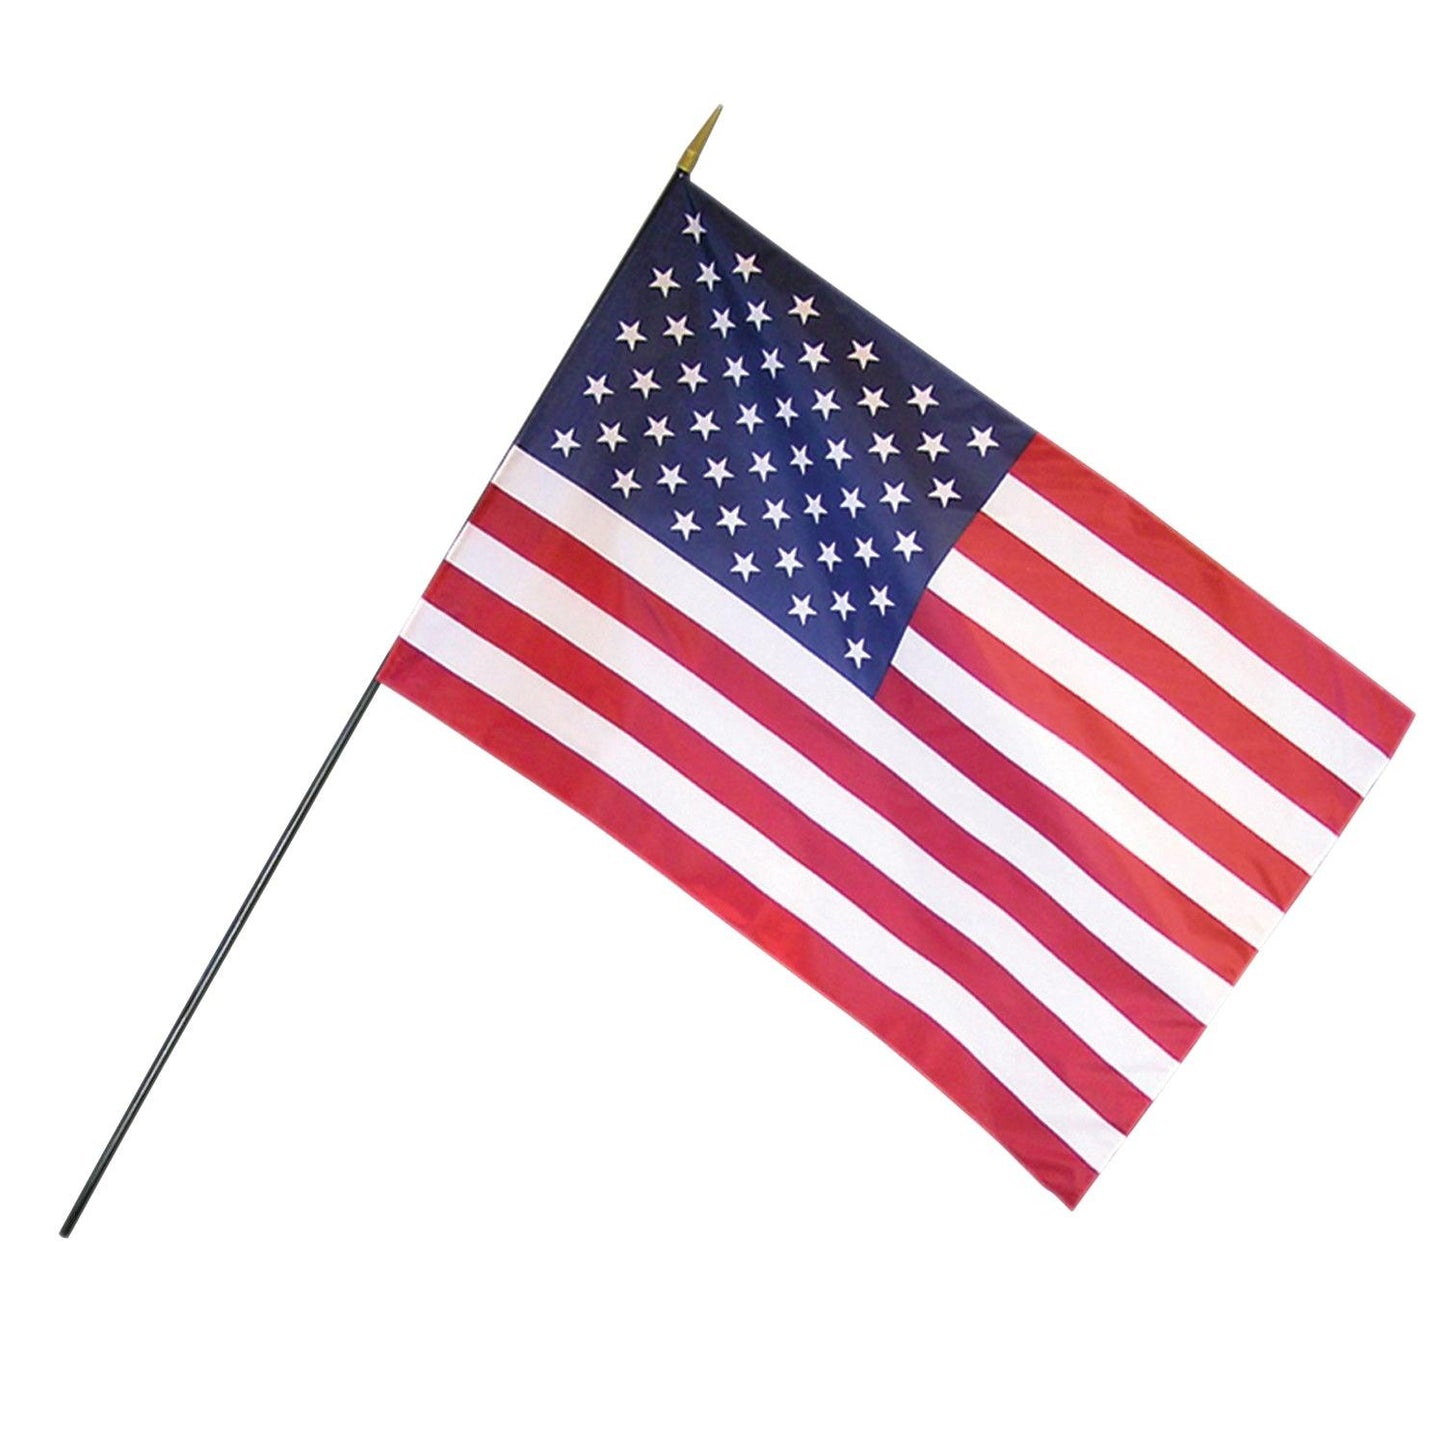 Empire Brand U.S. Classroom Flag with Staff, 36" x 24" - Loomini